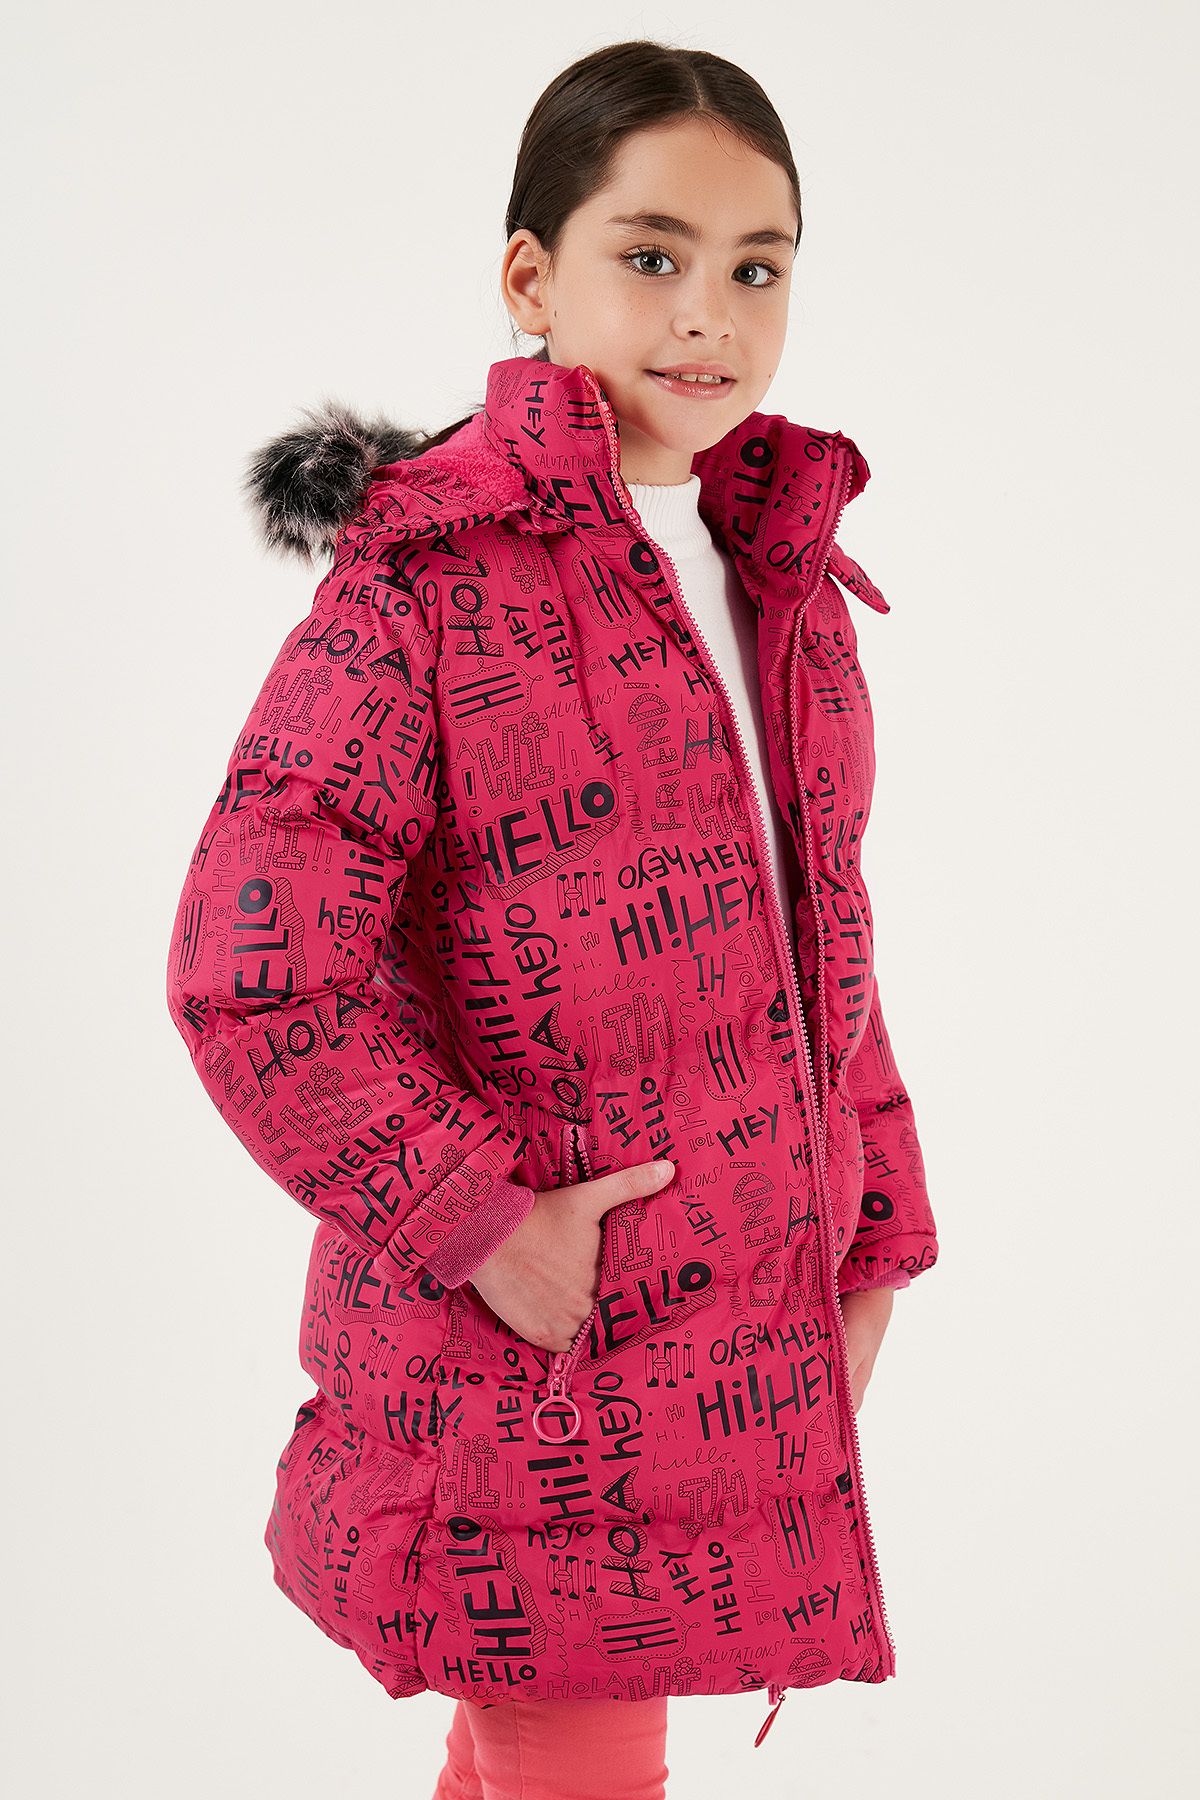 Lela کت خز مصنوعی چاپ شده با کلاه مخملی متحرک زمستانی دخترانه